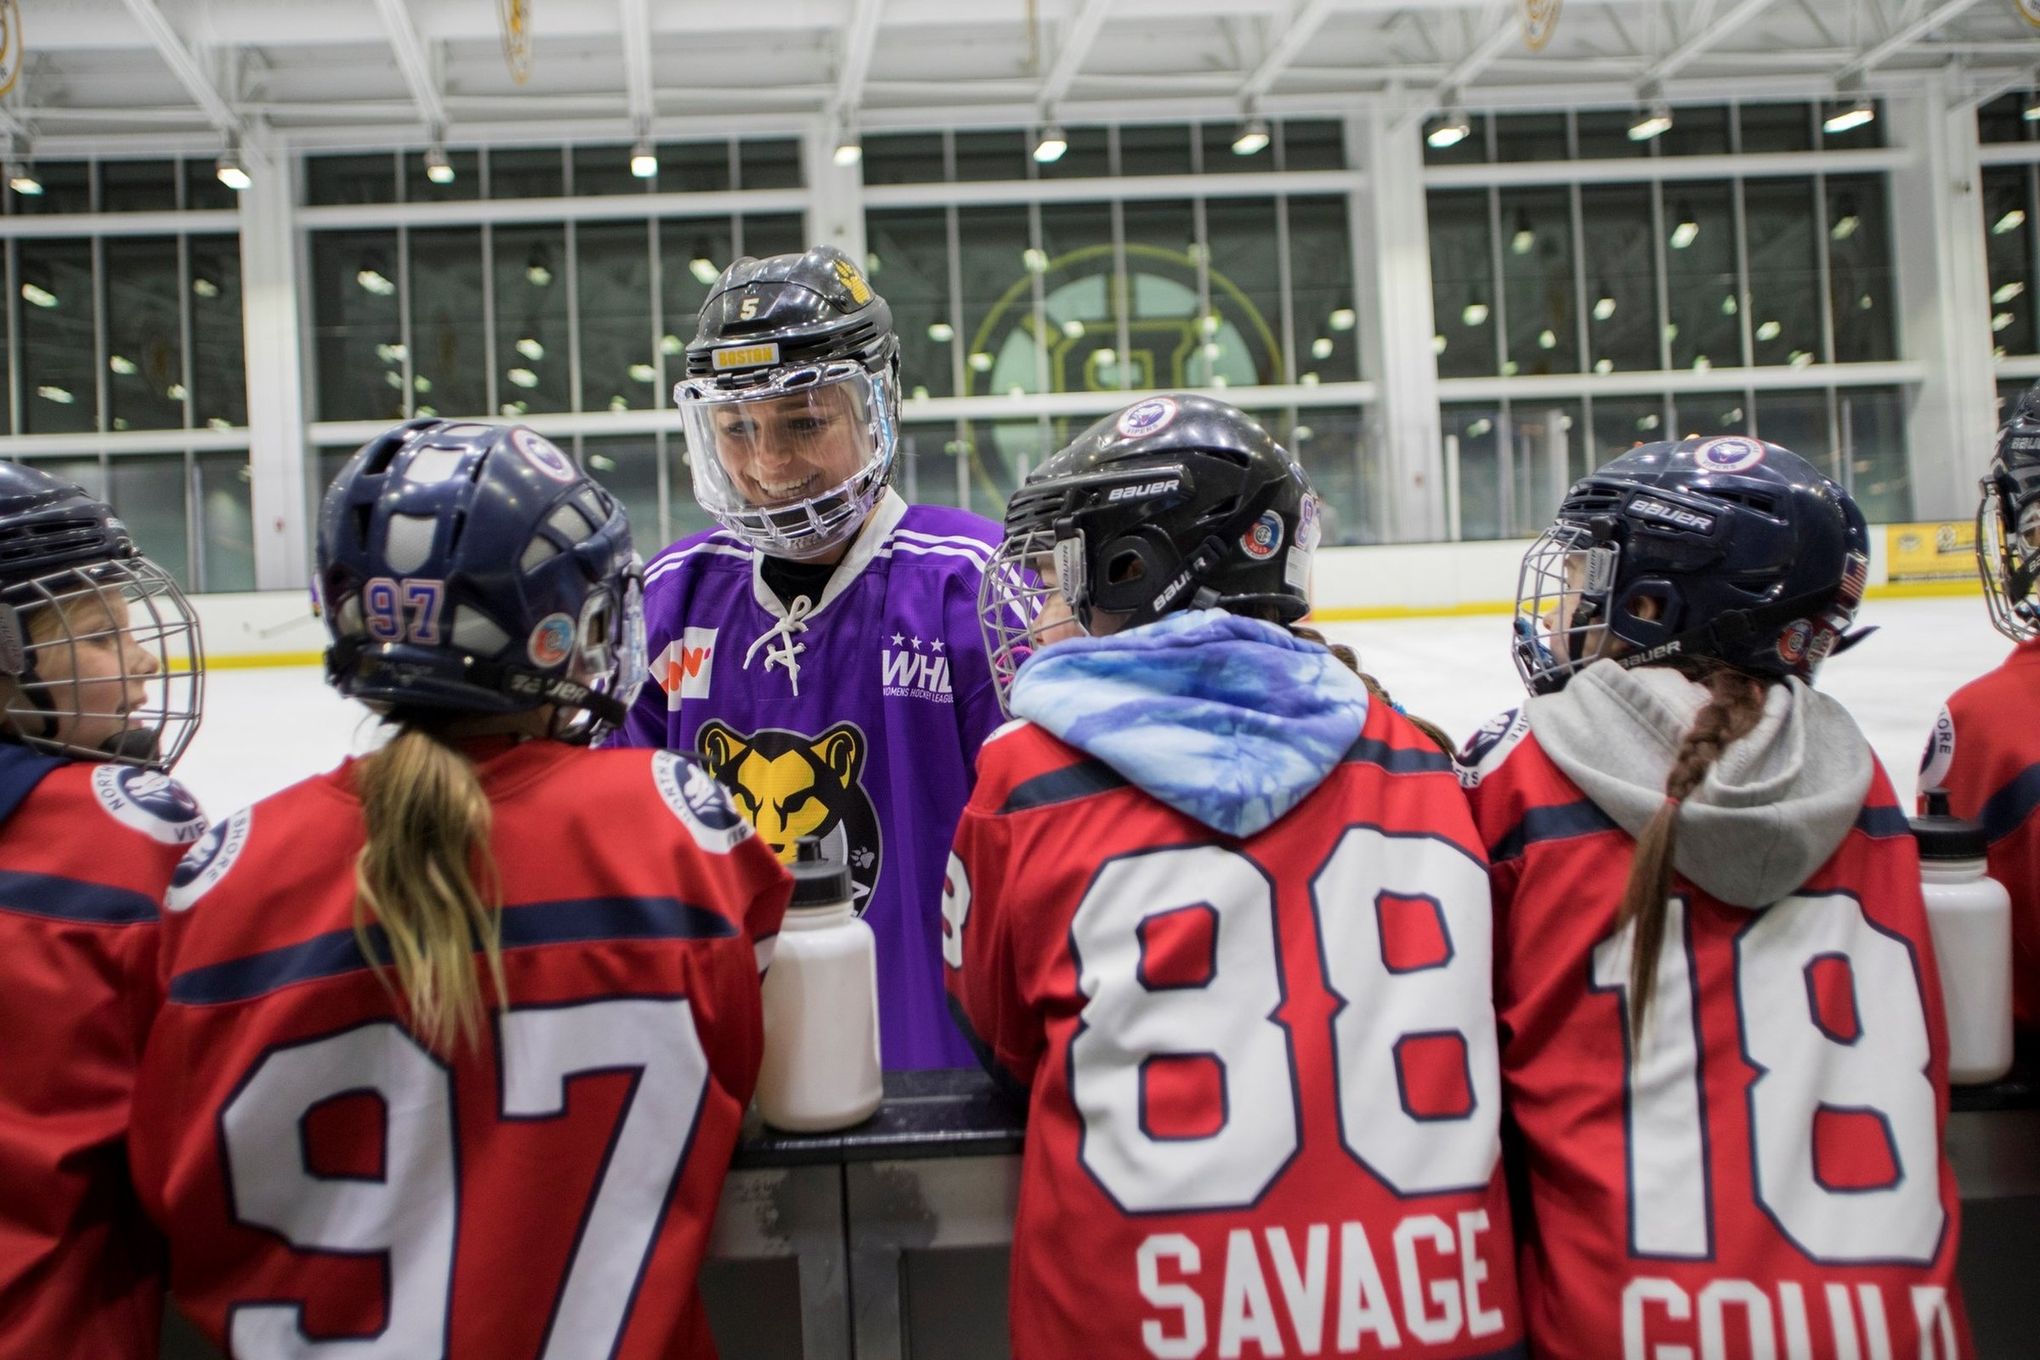 Skates on: National women's pro hockey league expands to Minnesota